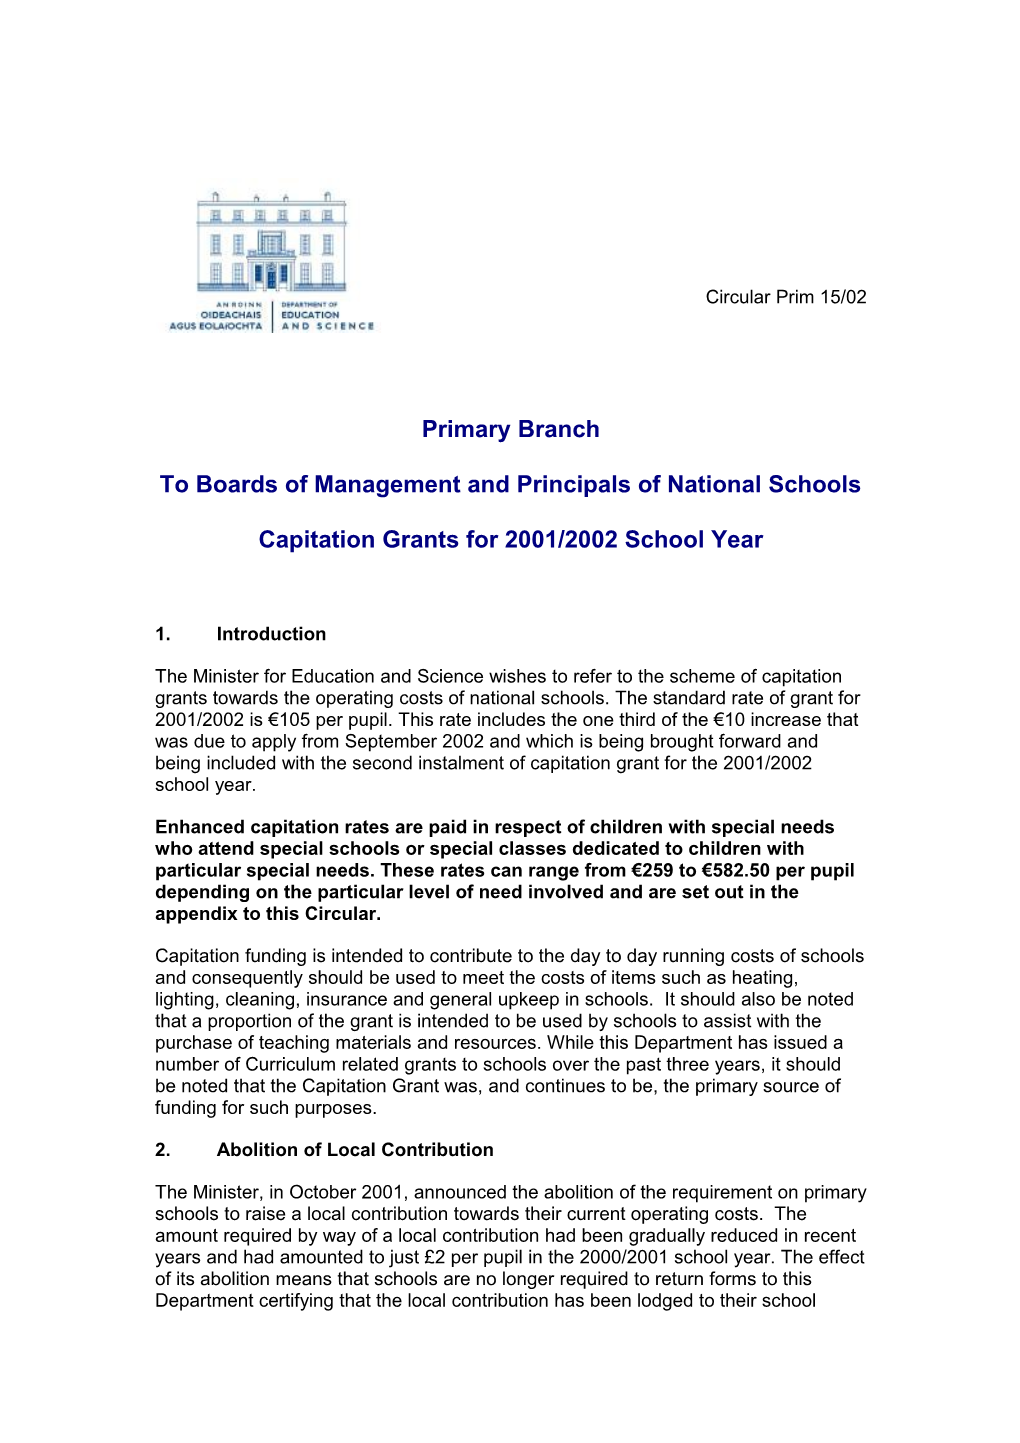 Primary Circular 15/02 Capitation Grants for 2001/2002 School Year (Word Format 44KB)